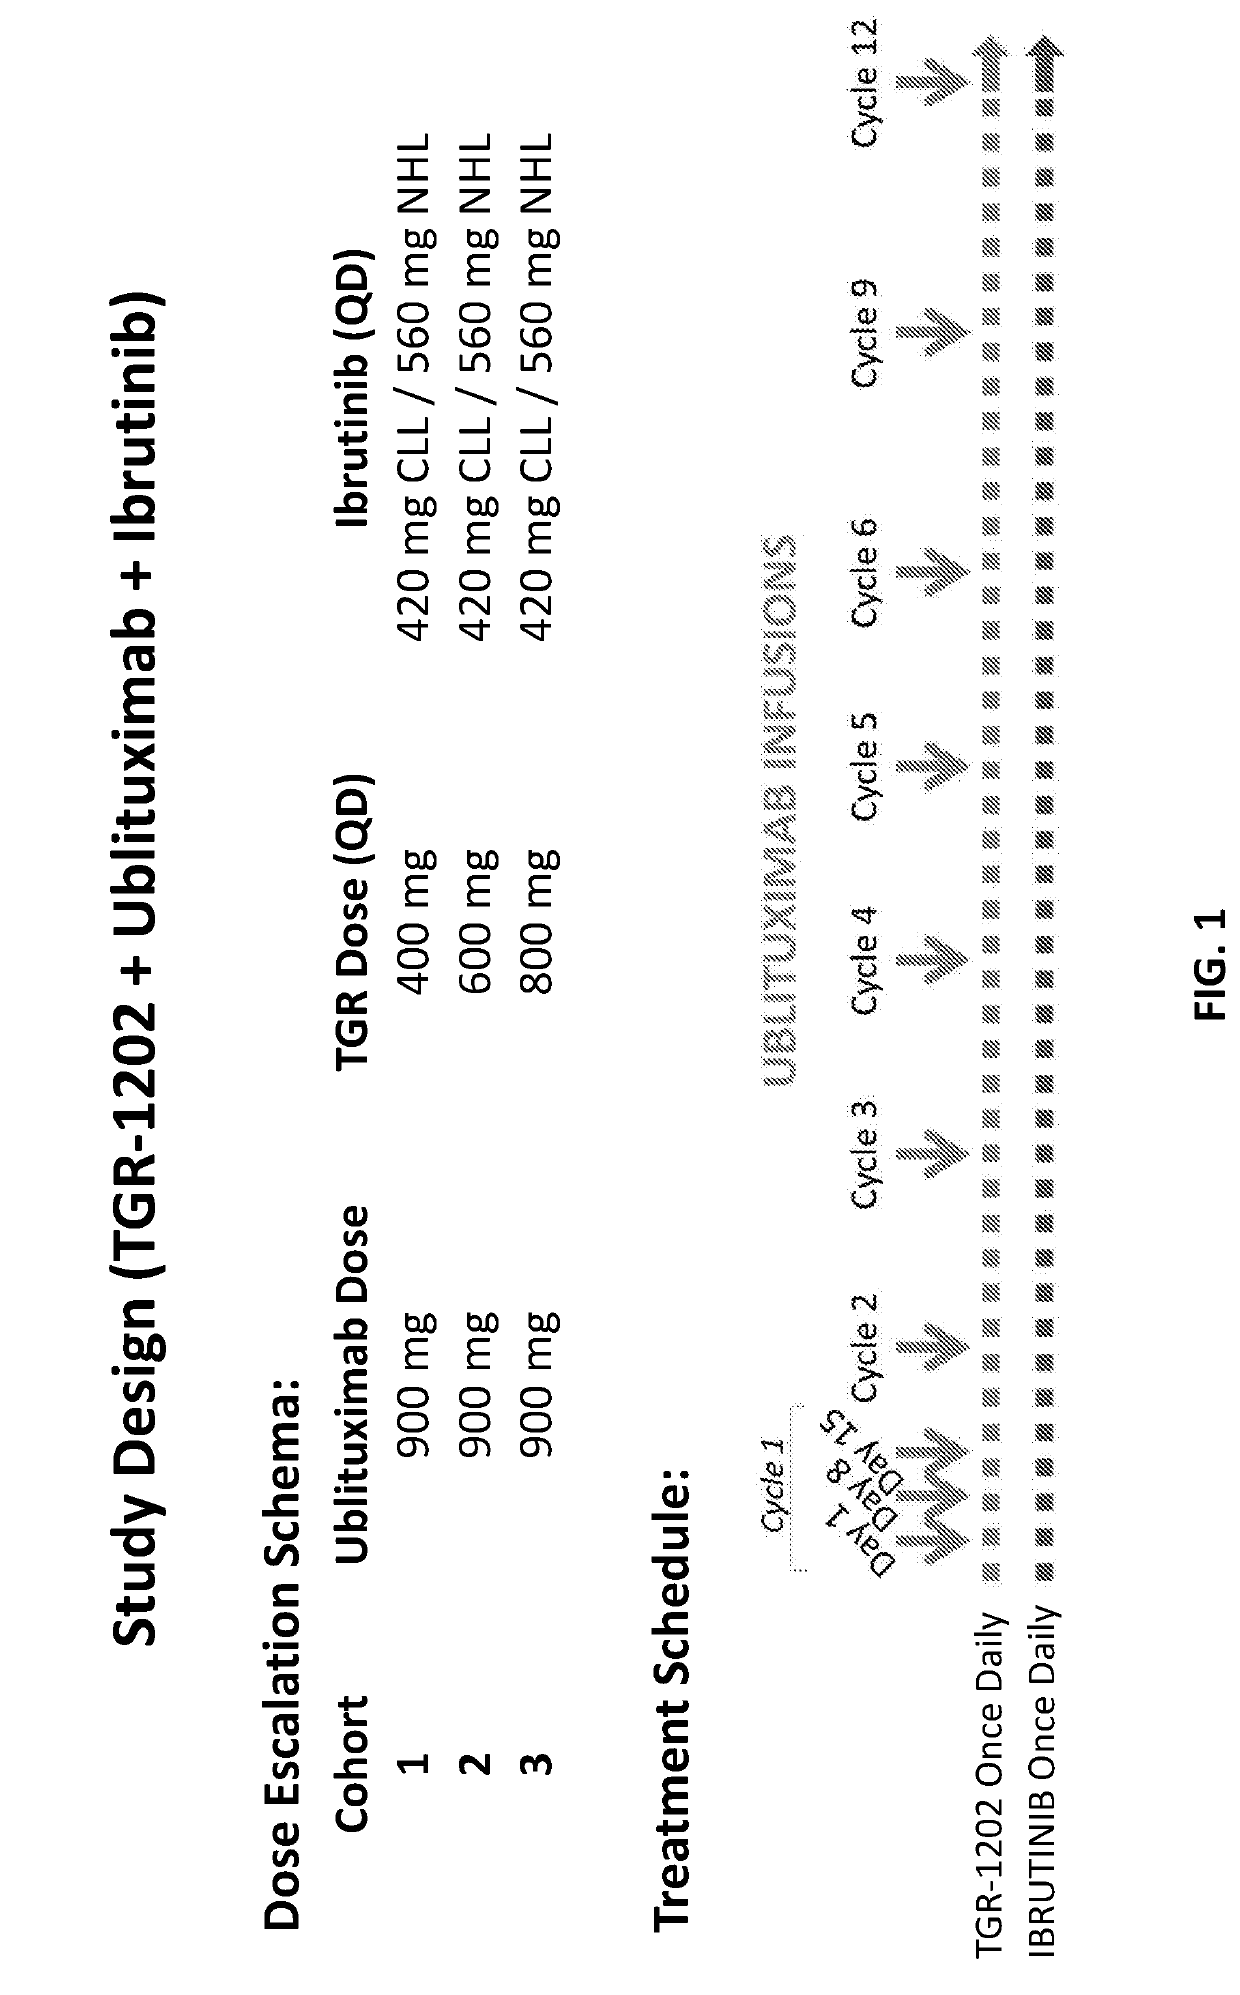 Combination of Anti-cd20 antibody, p13 kinase-delta selective inhibitor, and btk inhibitor to treat b-cell proliferative disorders